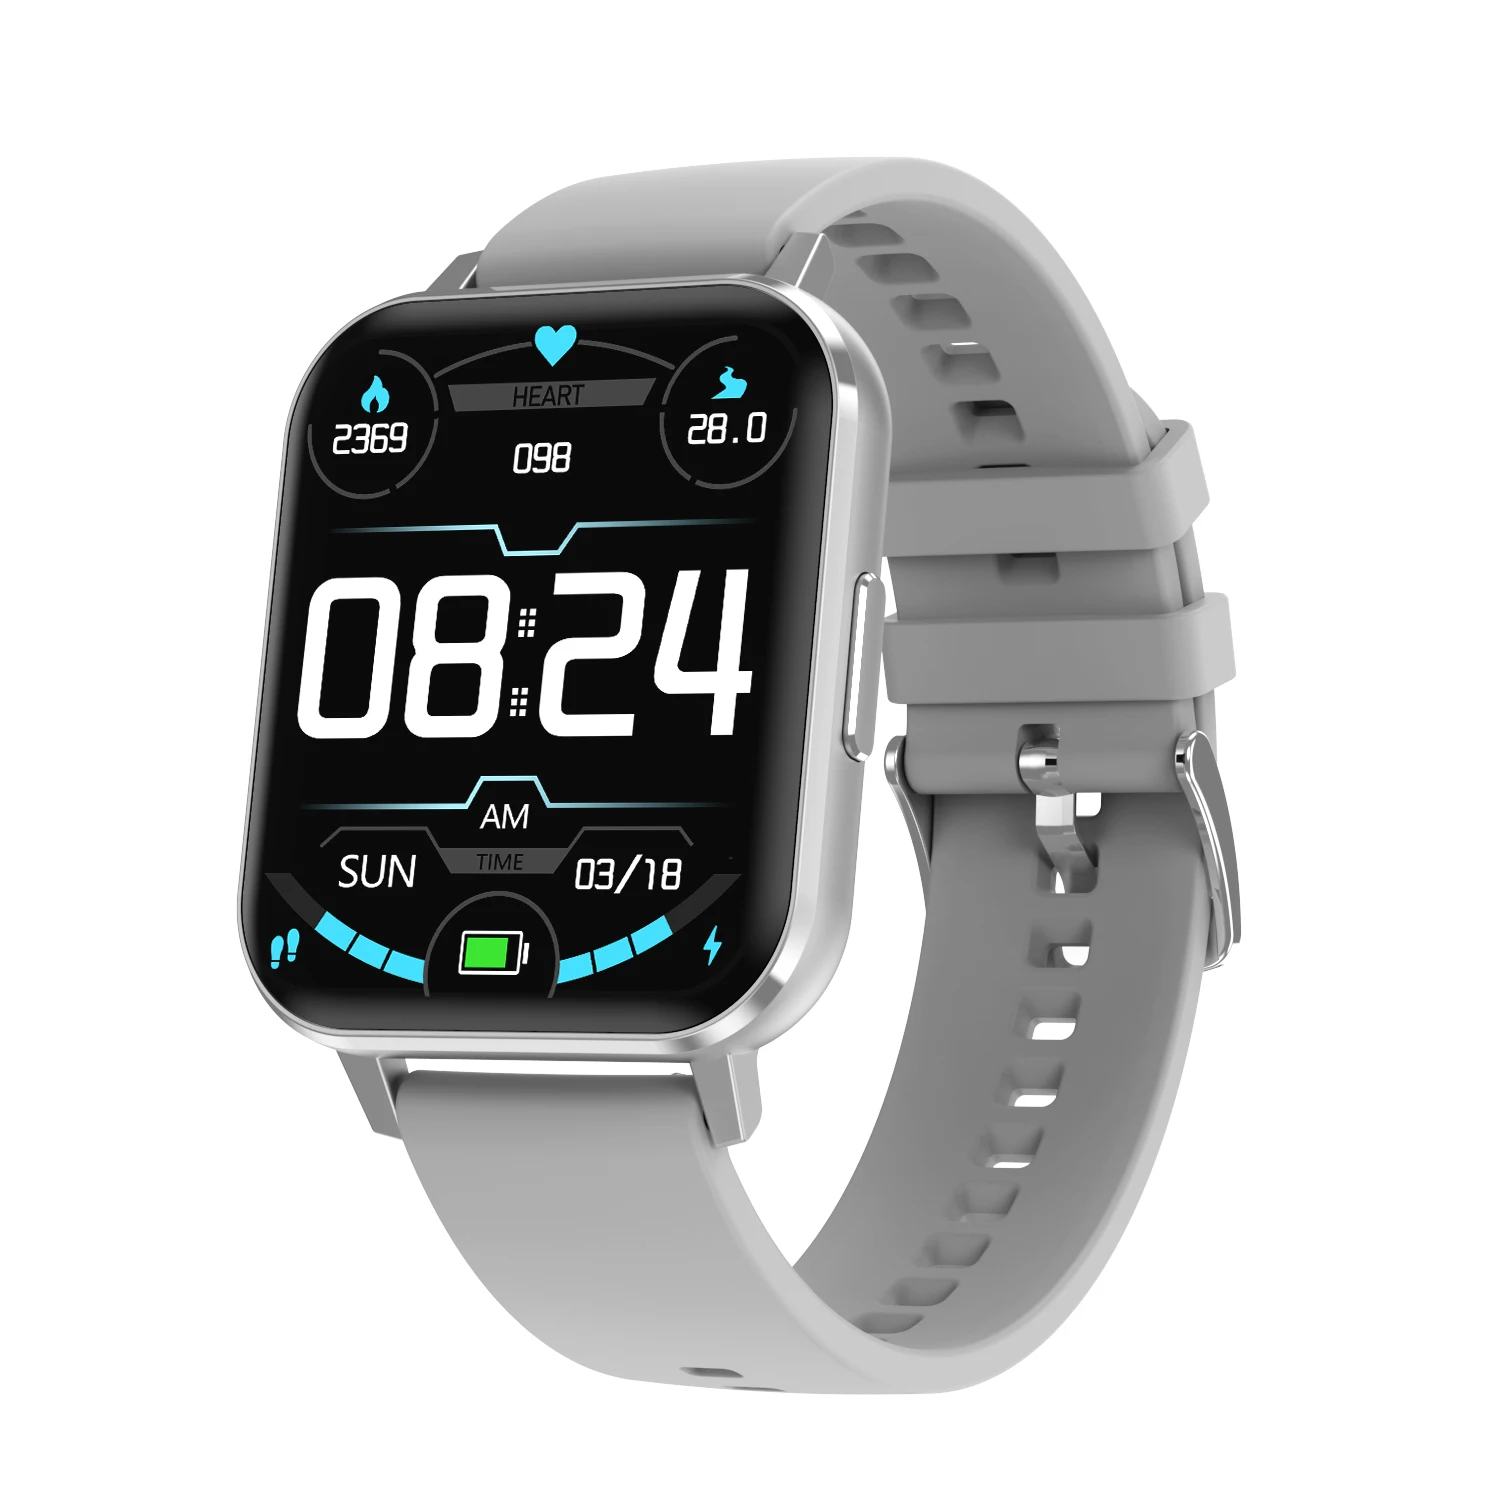 

Blood pressure heart rate blood oxygen sedentary reminder sleep monitoring smartband your health steward Smart sports bracelet